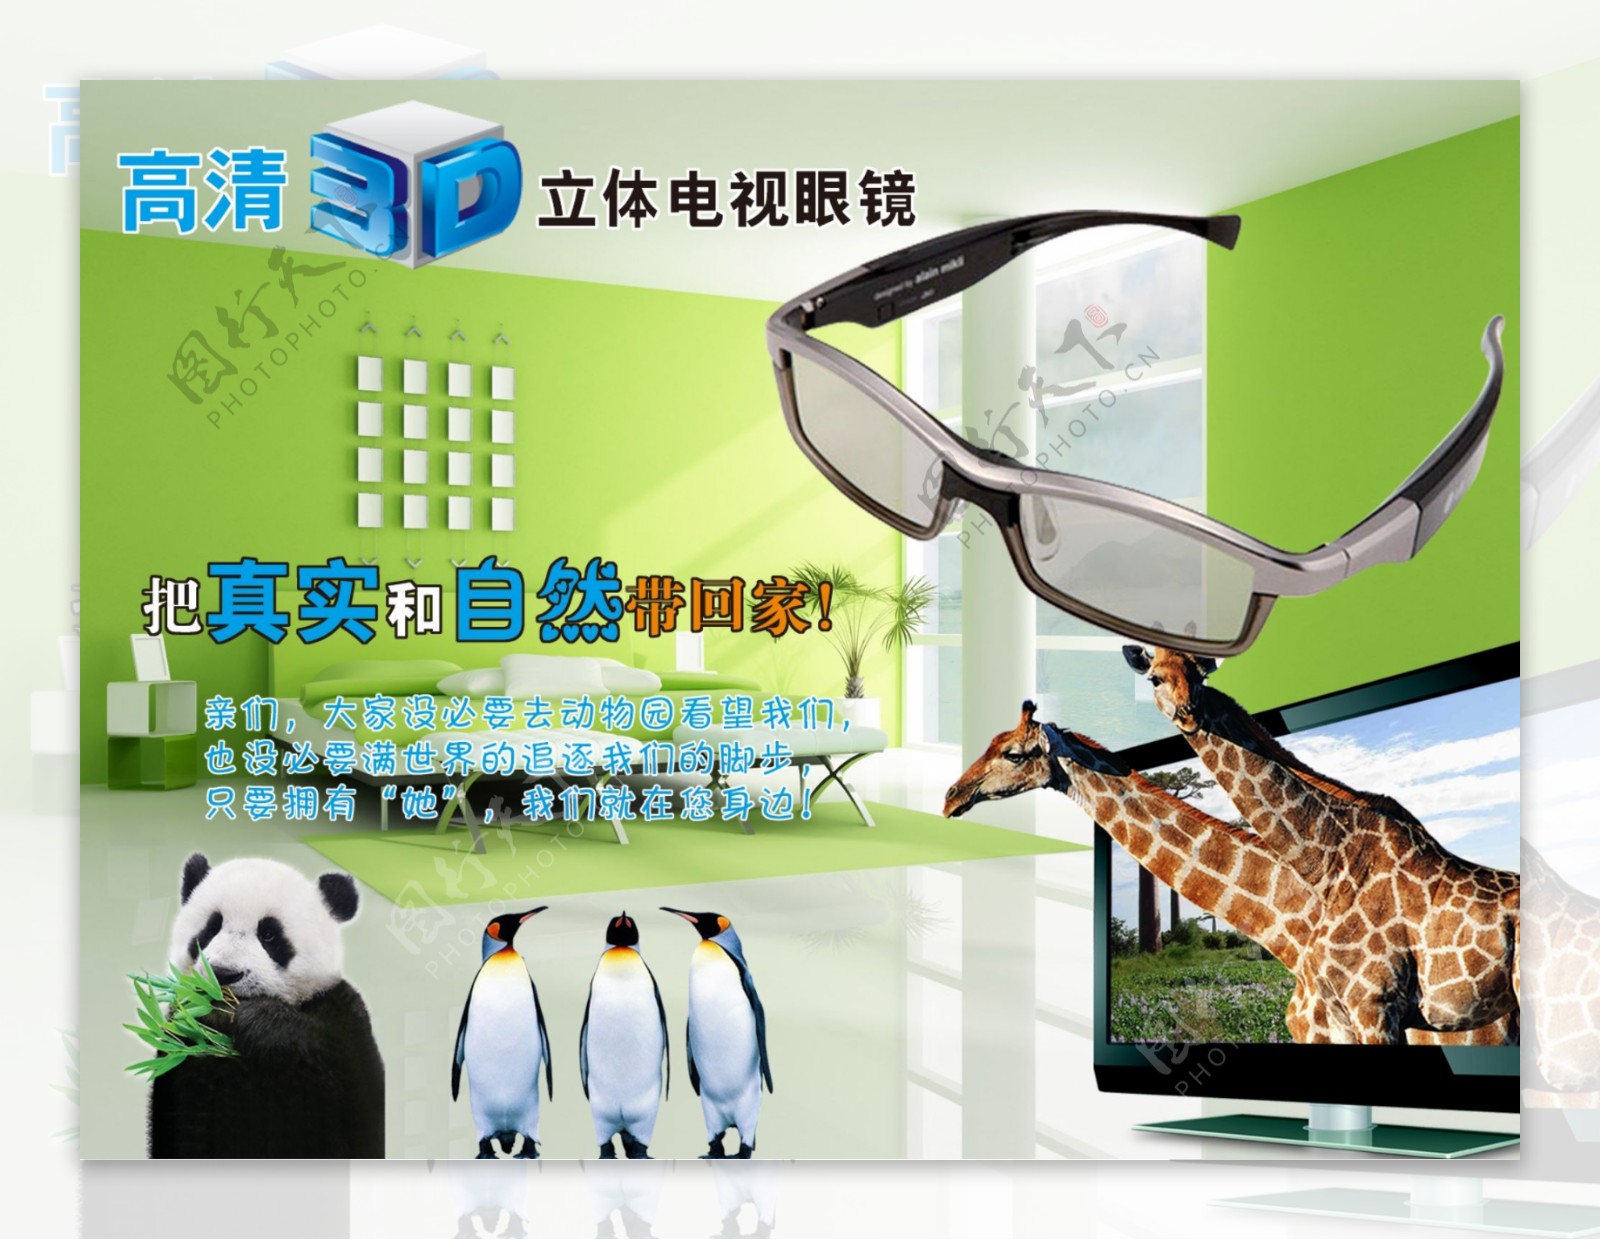 3D立体电视眼镜宣传海报